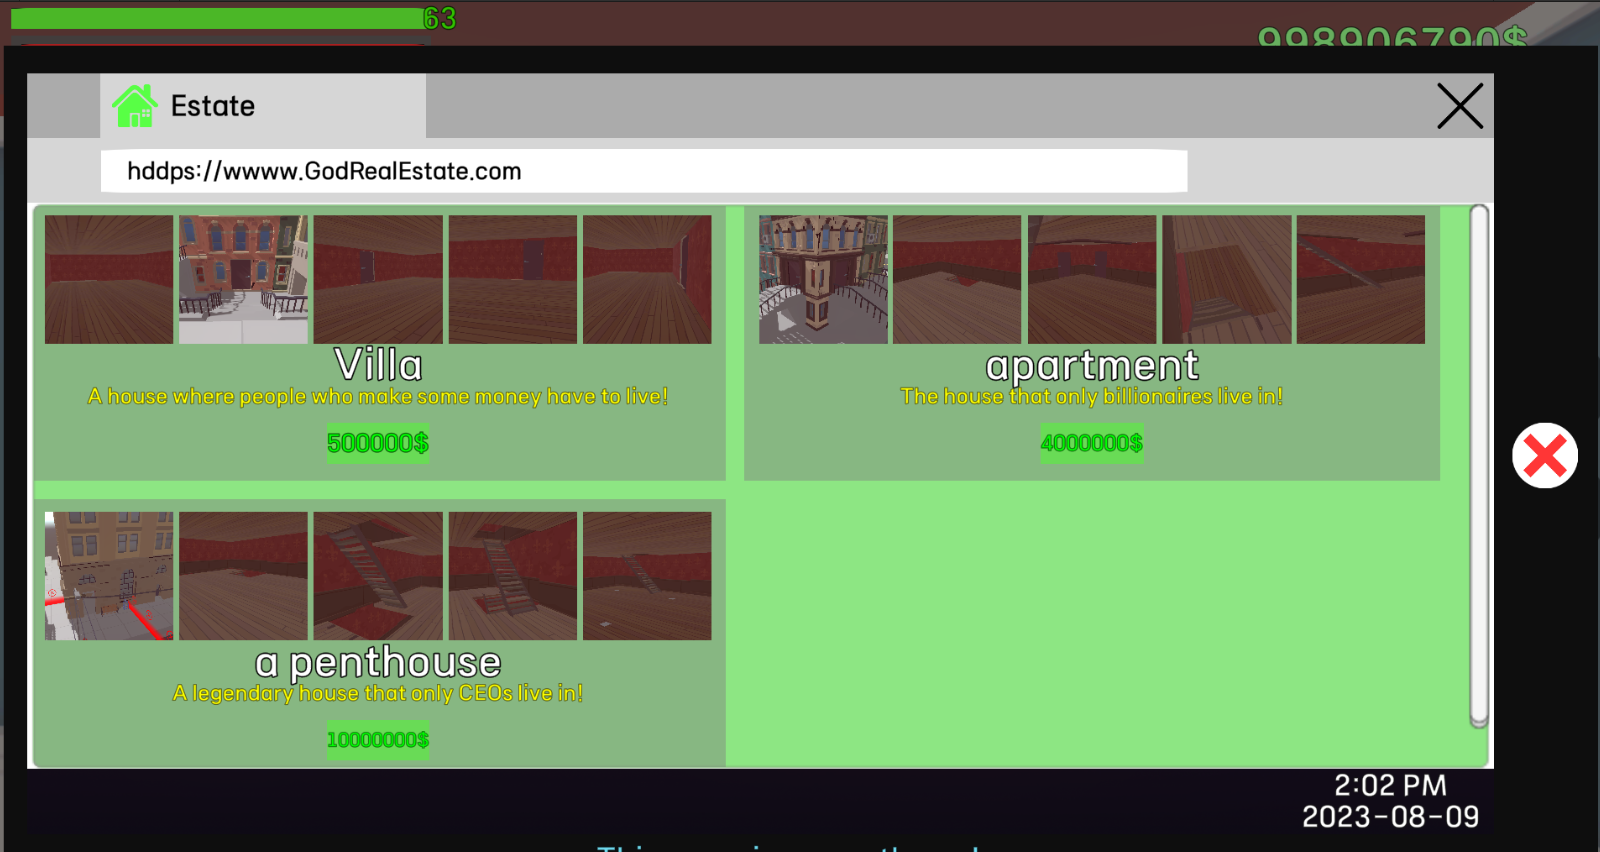 Screenshot of Internet Cafe Simulator 2